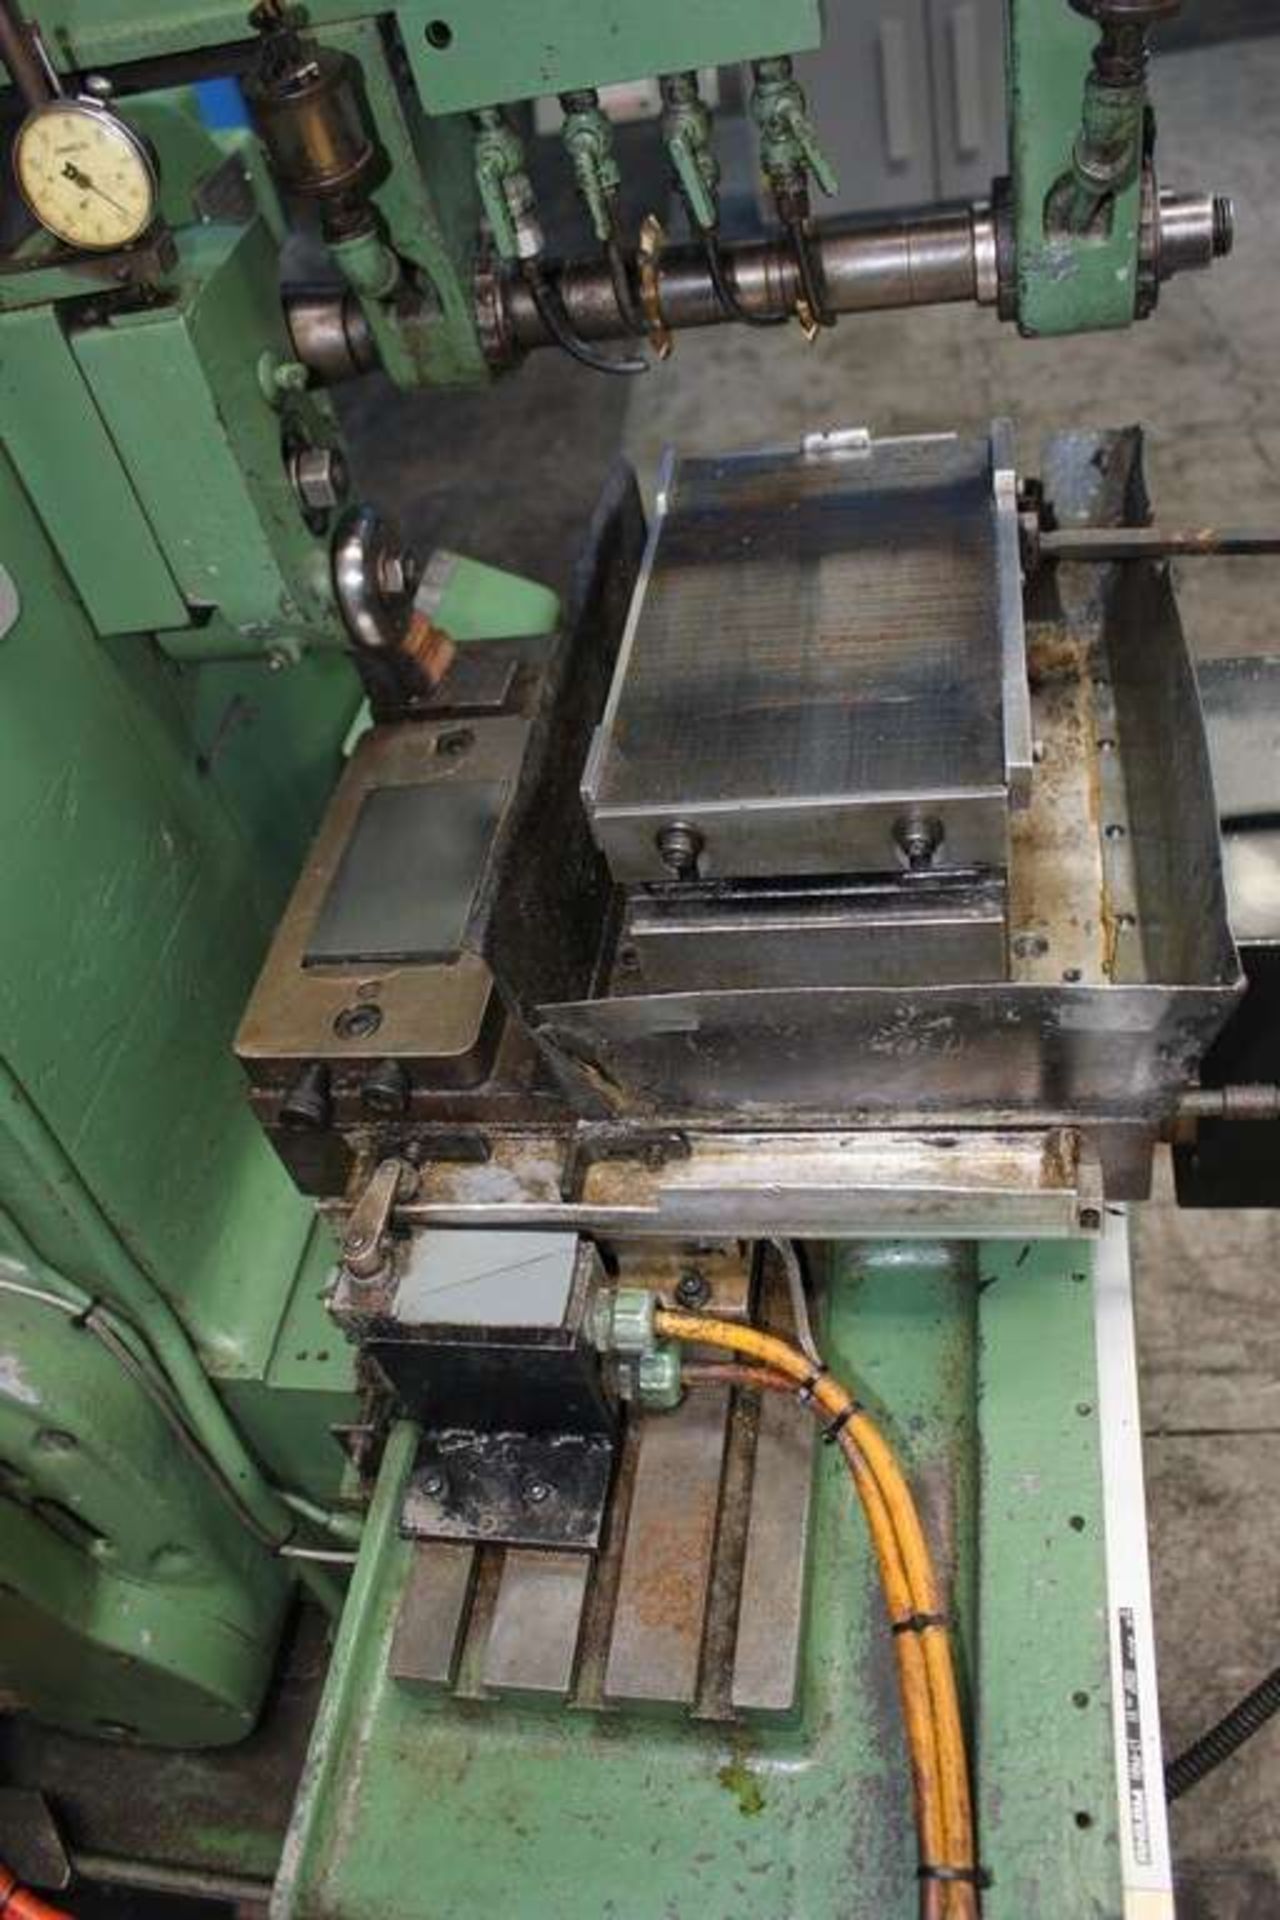 6.5" x 24" Cincinnati Model 0-8 CNC Horizontal Production Mill, S/N 1- 48M- 582520- 2, Anilam 3200MK - Image 8 of 15